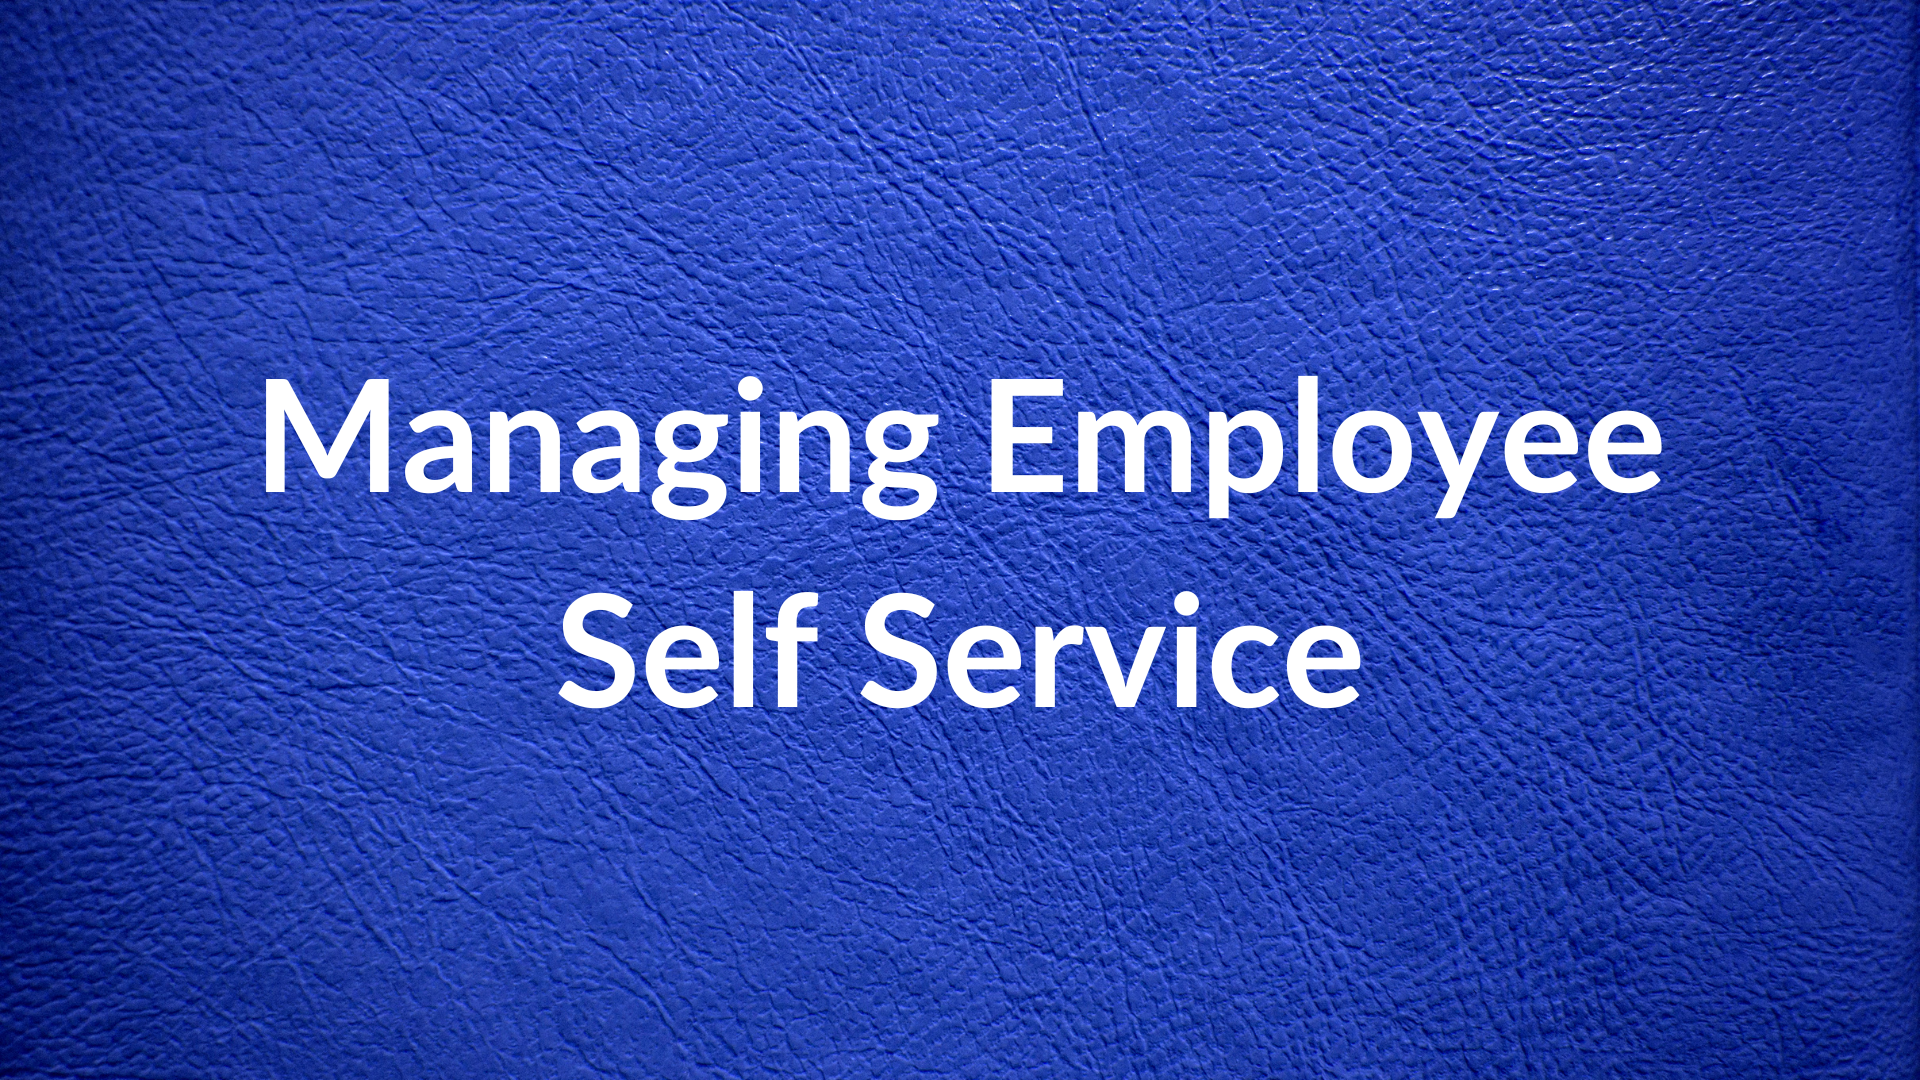 Managing Employee Self Service